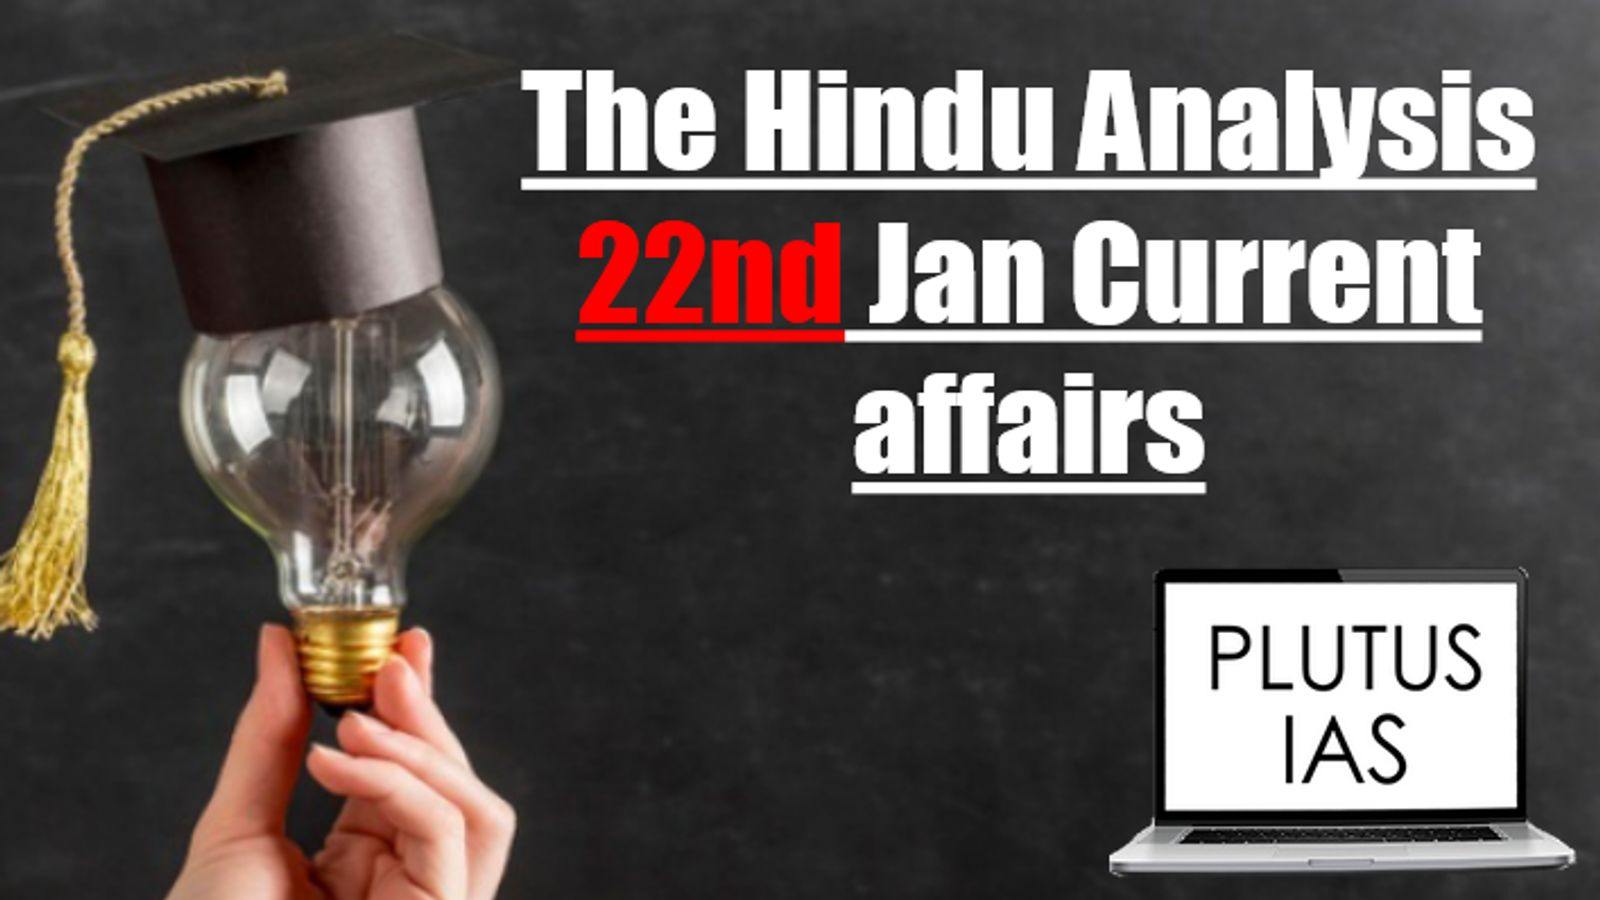 The Hindu Analysis 22nd January